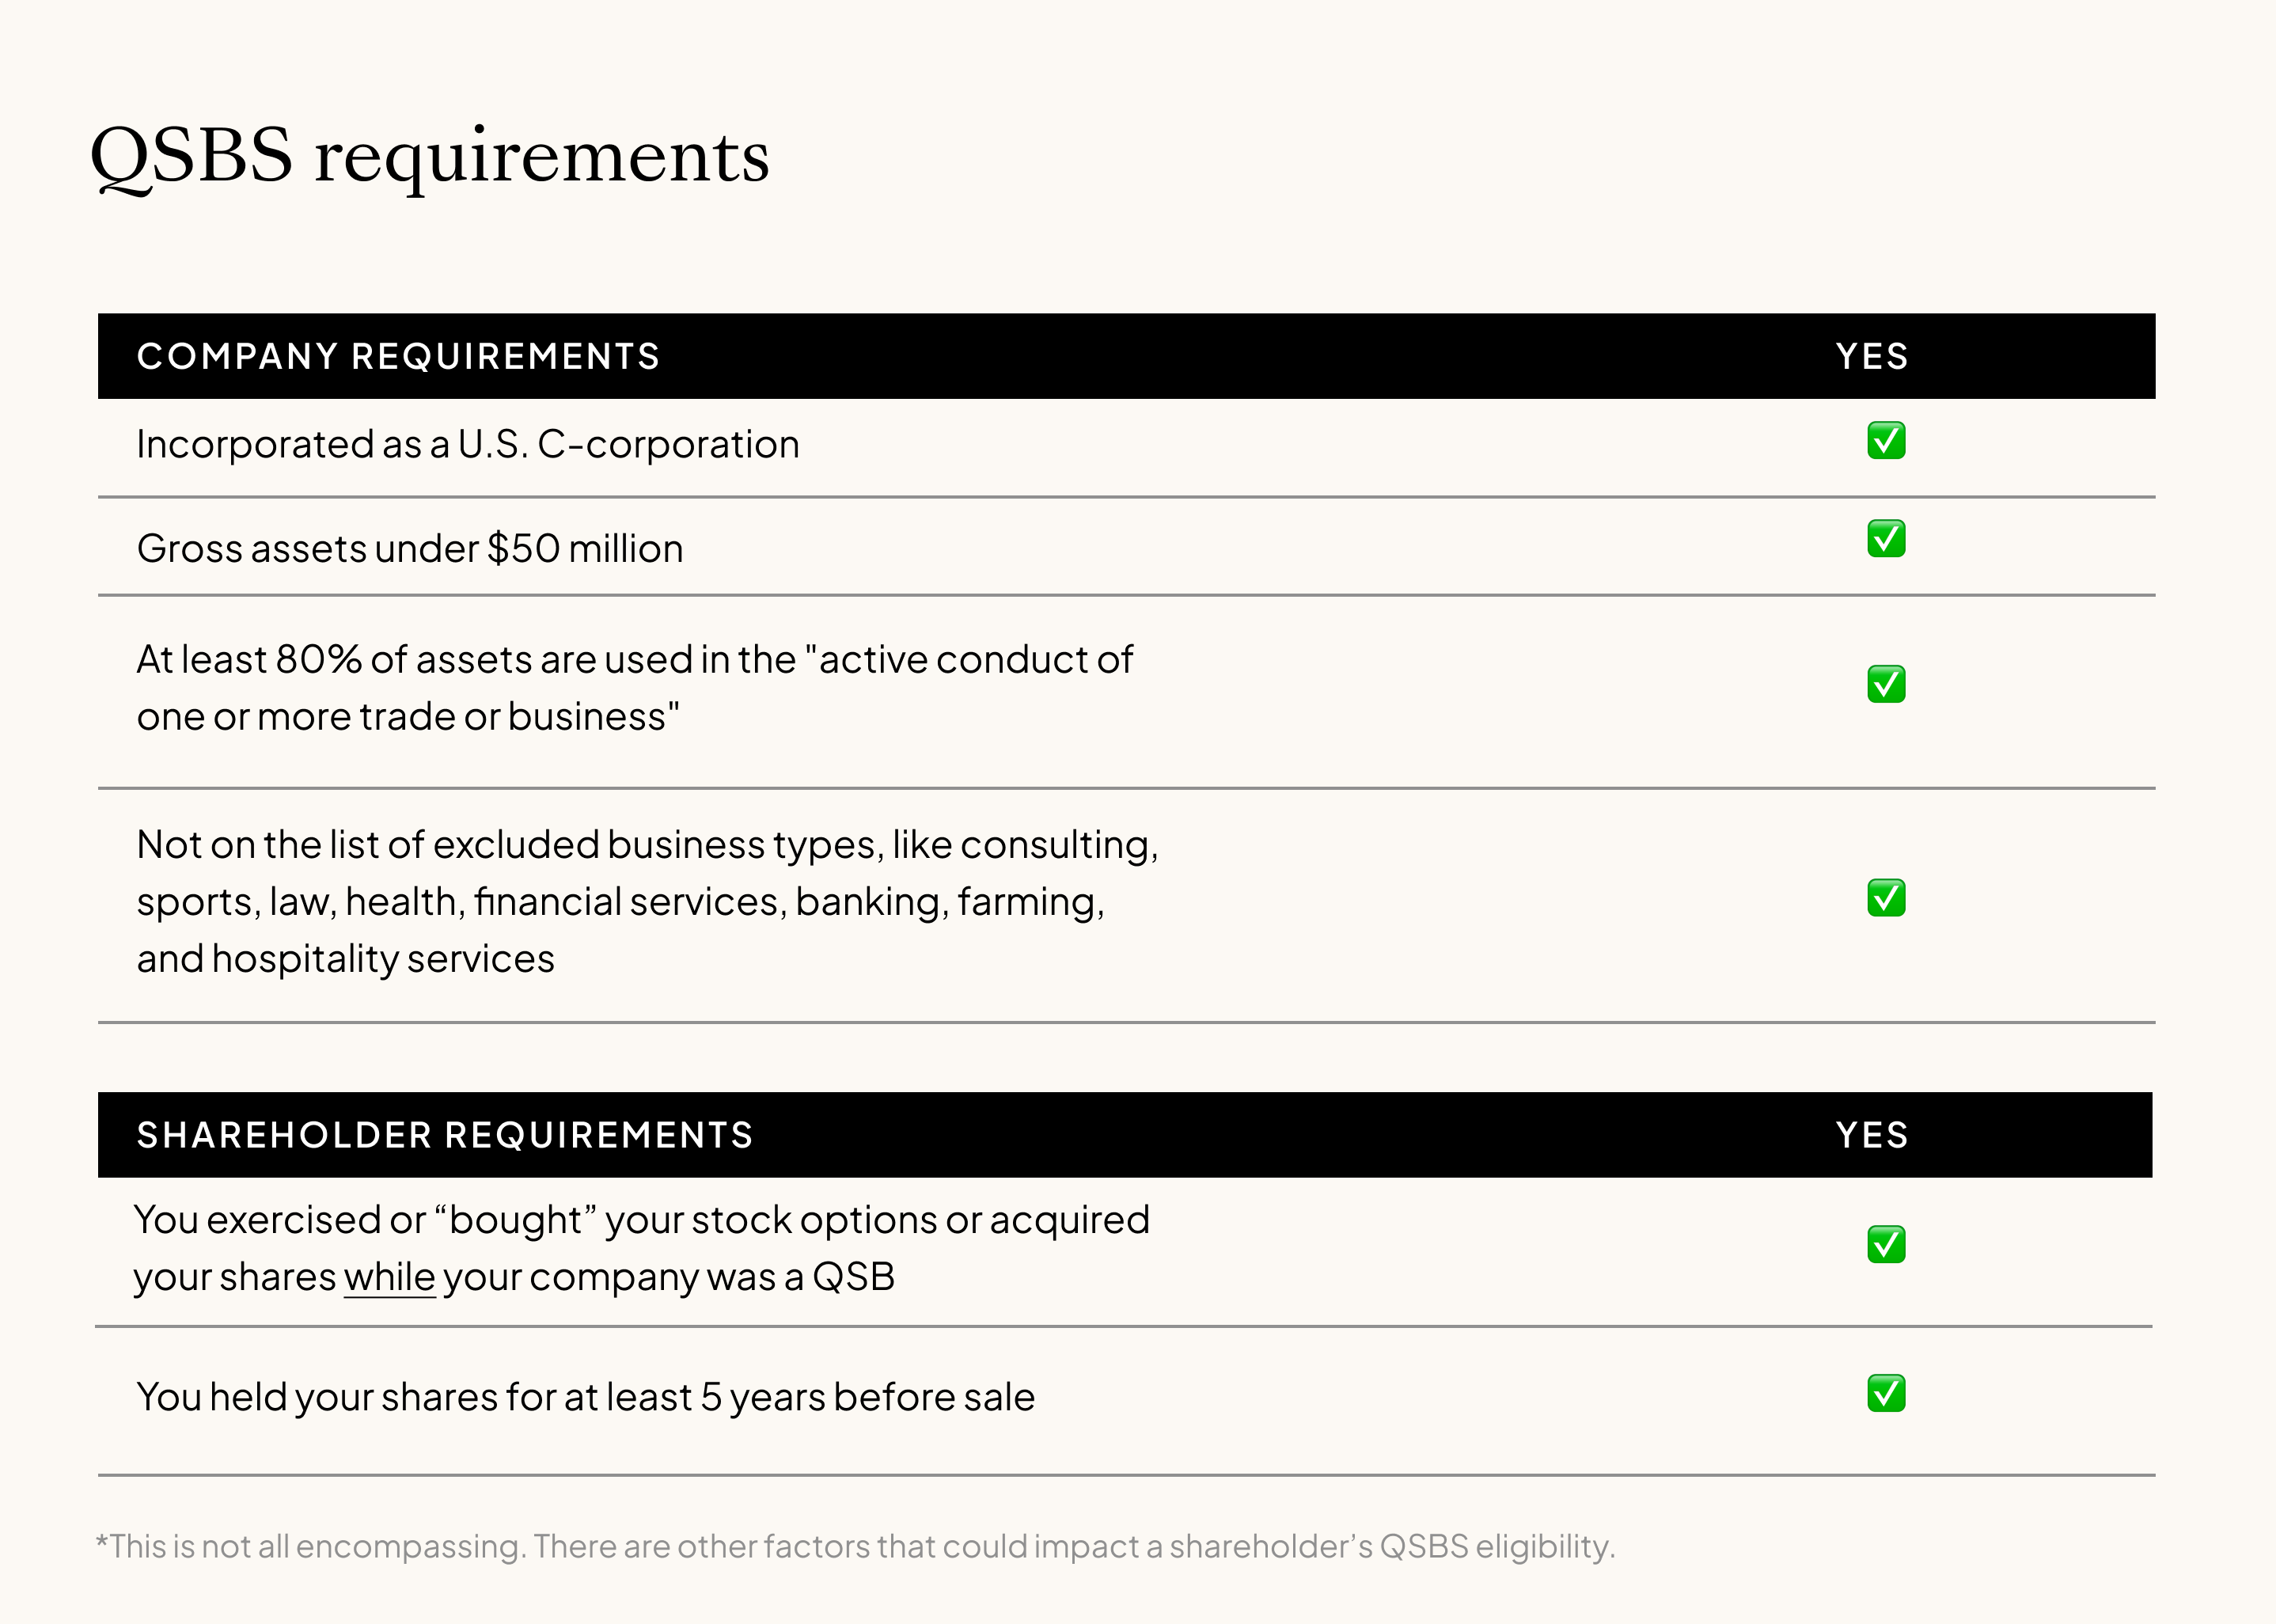 QSBS requirements image